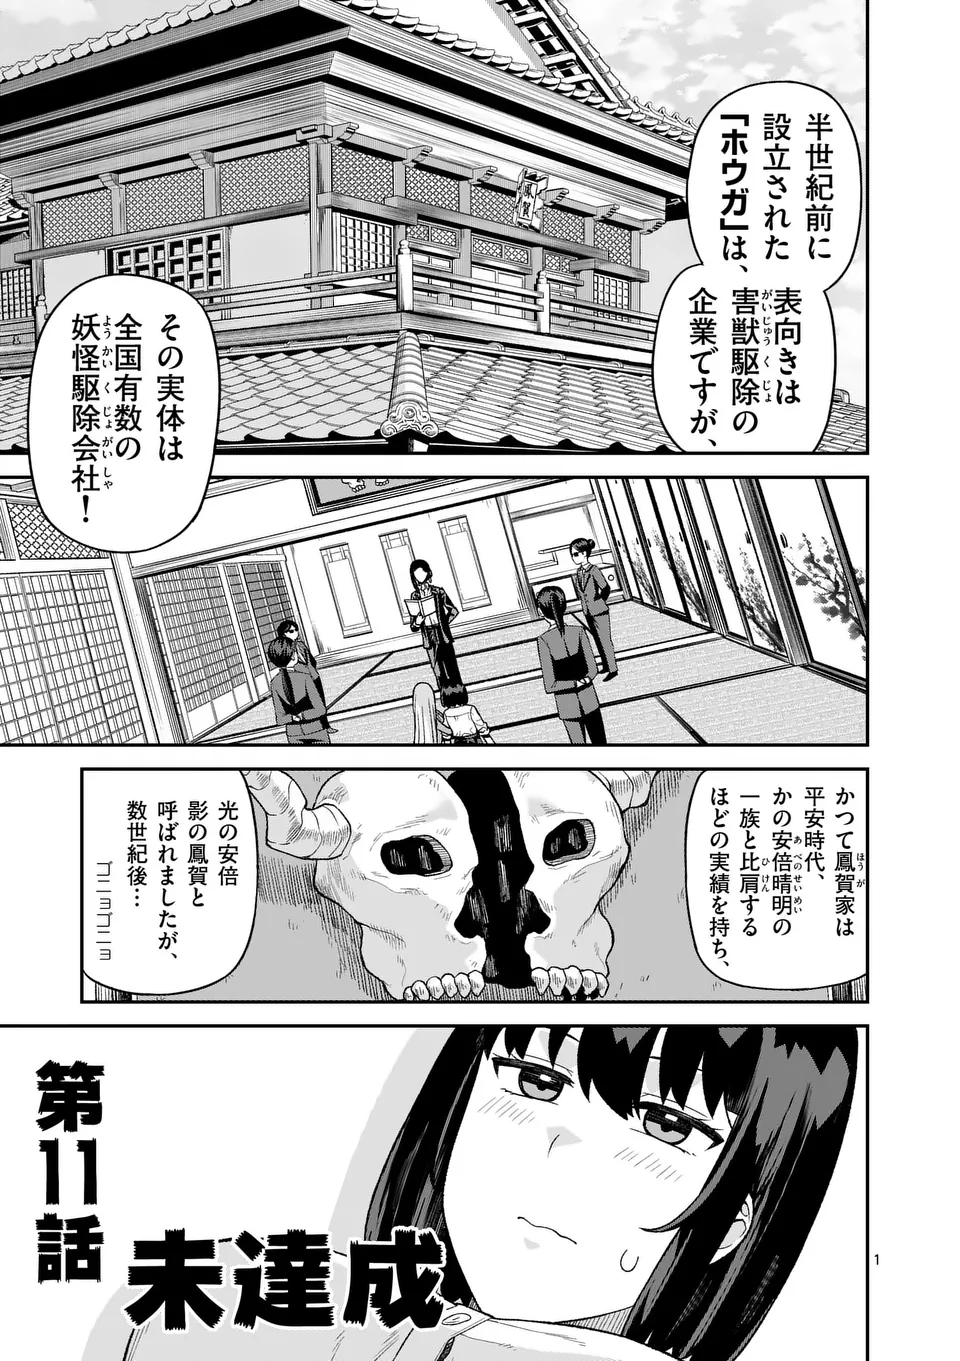 Bakemono Goroshi no Psycholily - Chapter 11 - Page 1